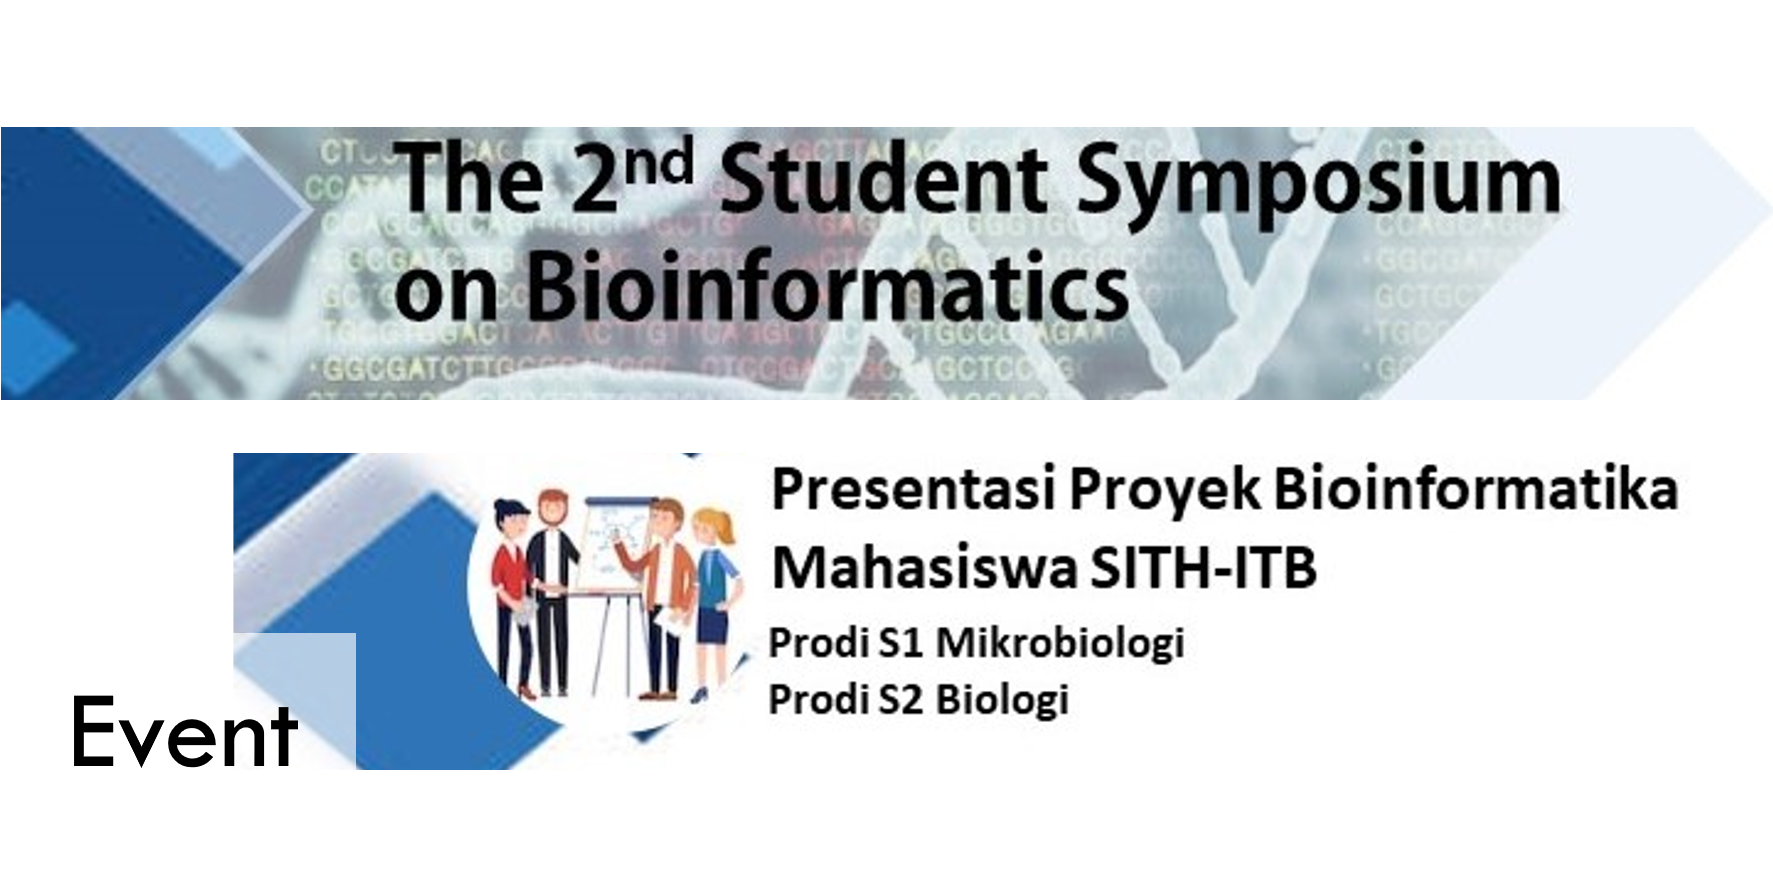 The 2nd Student Symposium on Bioinformatics